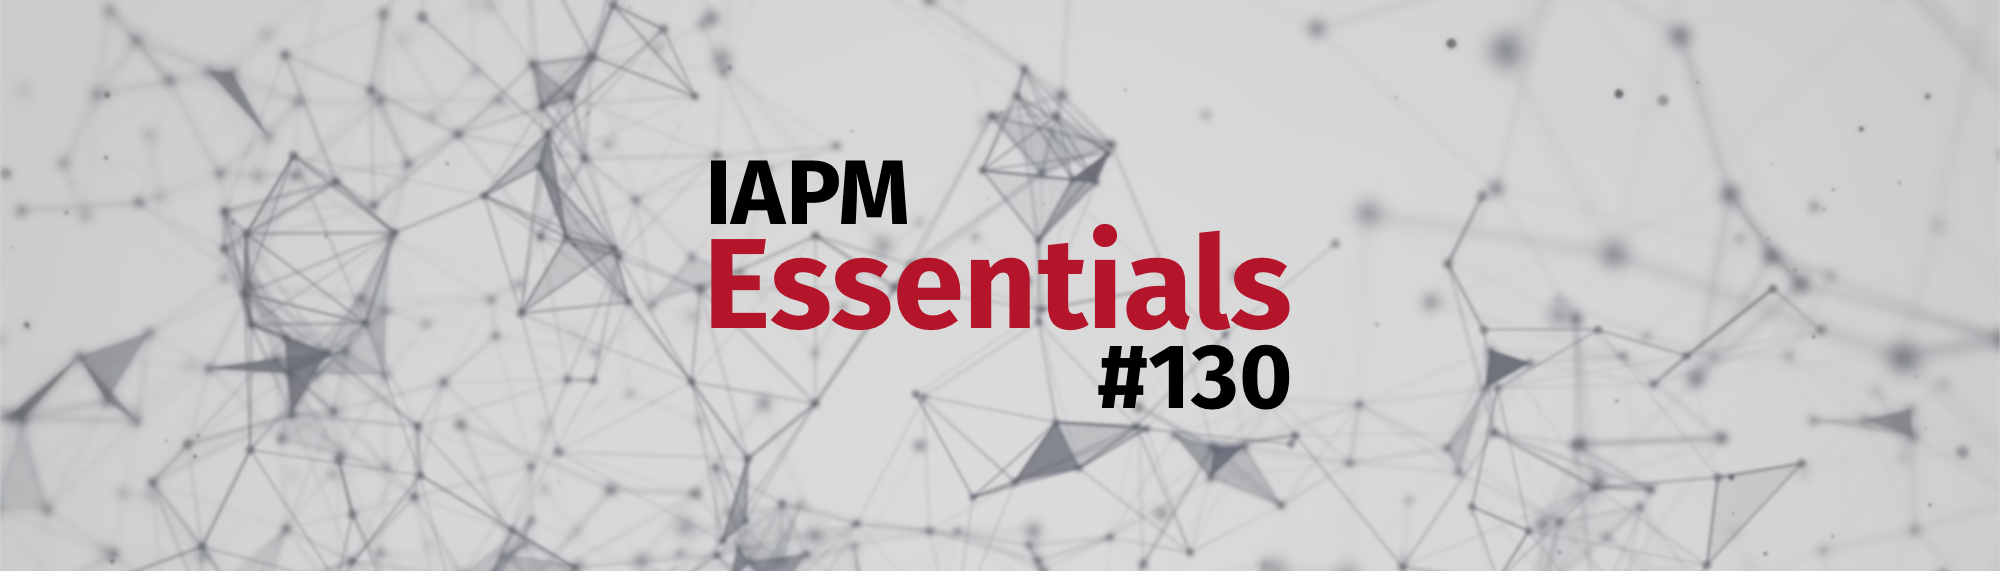 IAPM Essentials #130 - PM Neuigkeiten | IAPM